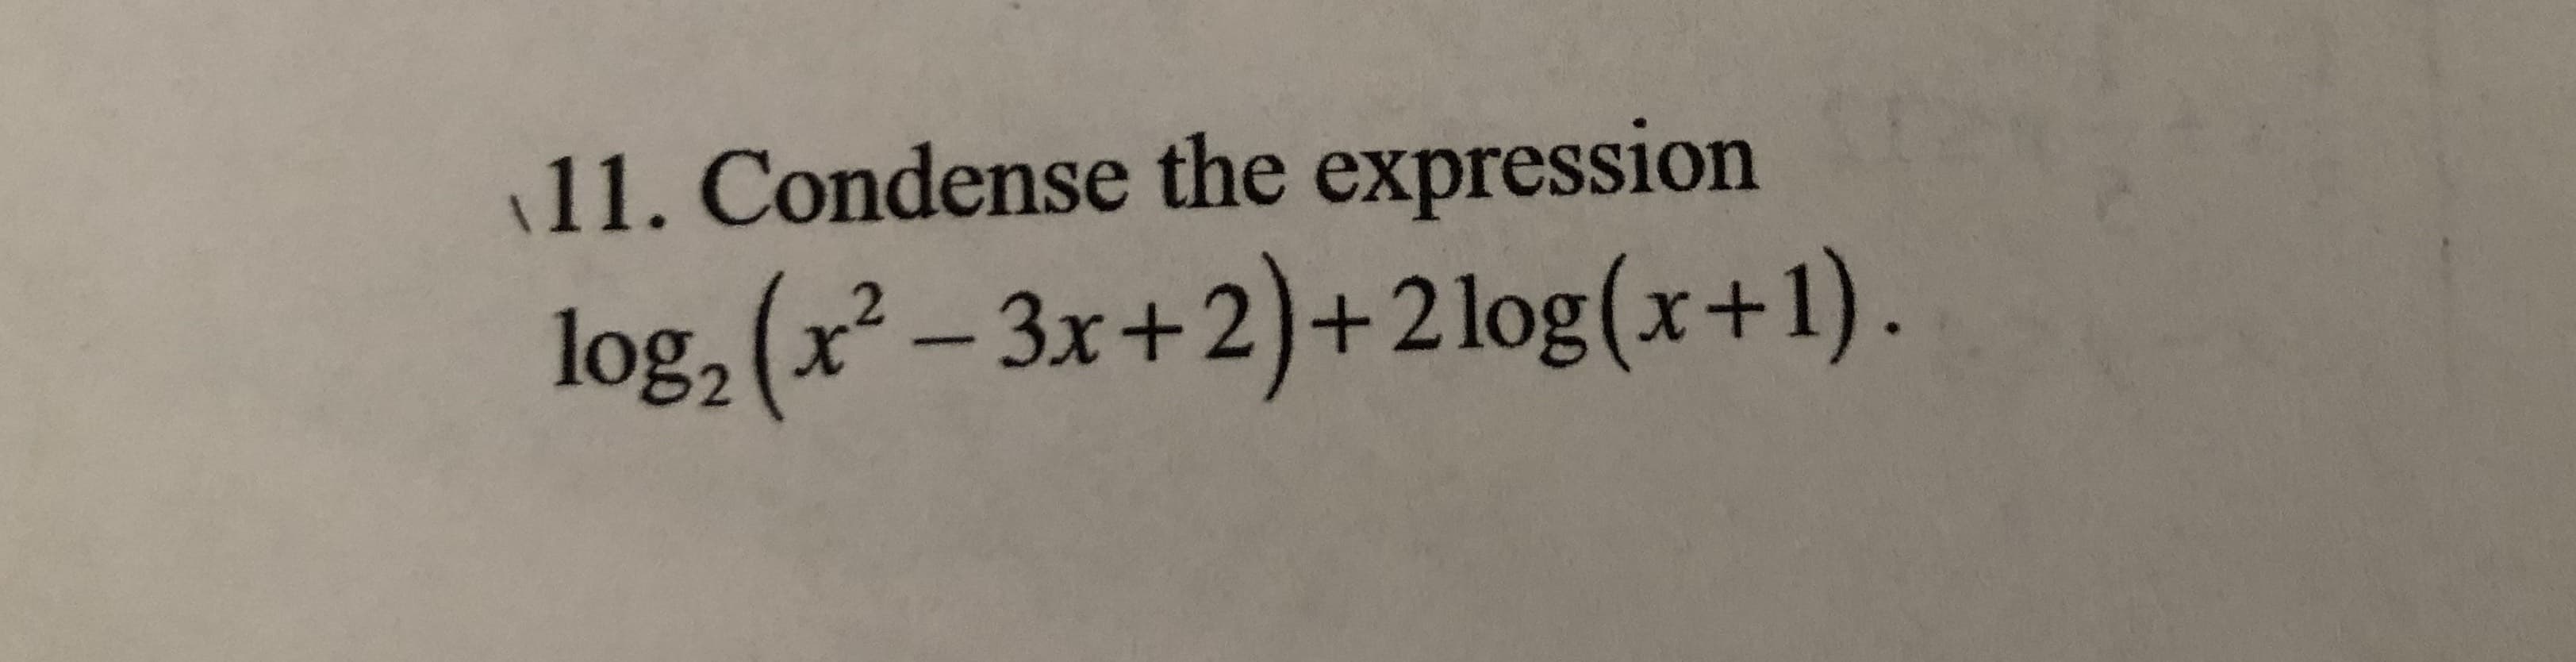 11. Condense the expression
log, (x² – 3x+2) .
+2log(x+1).
